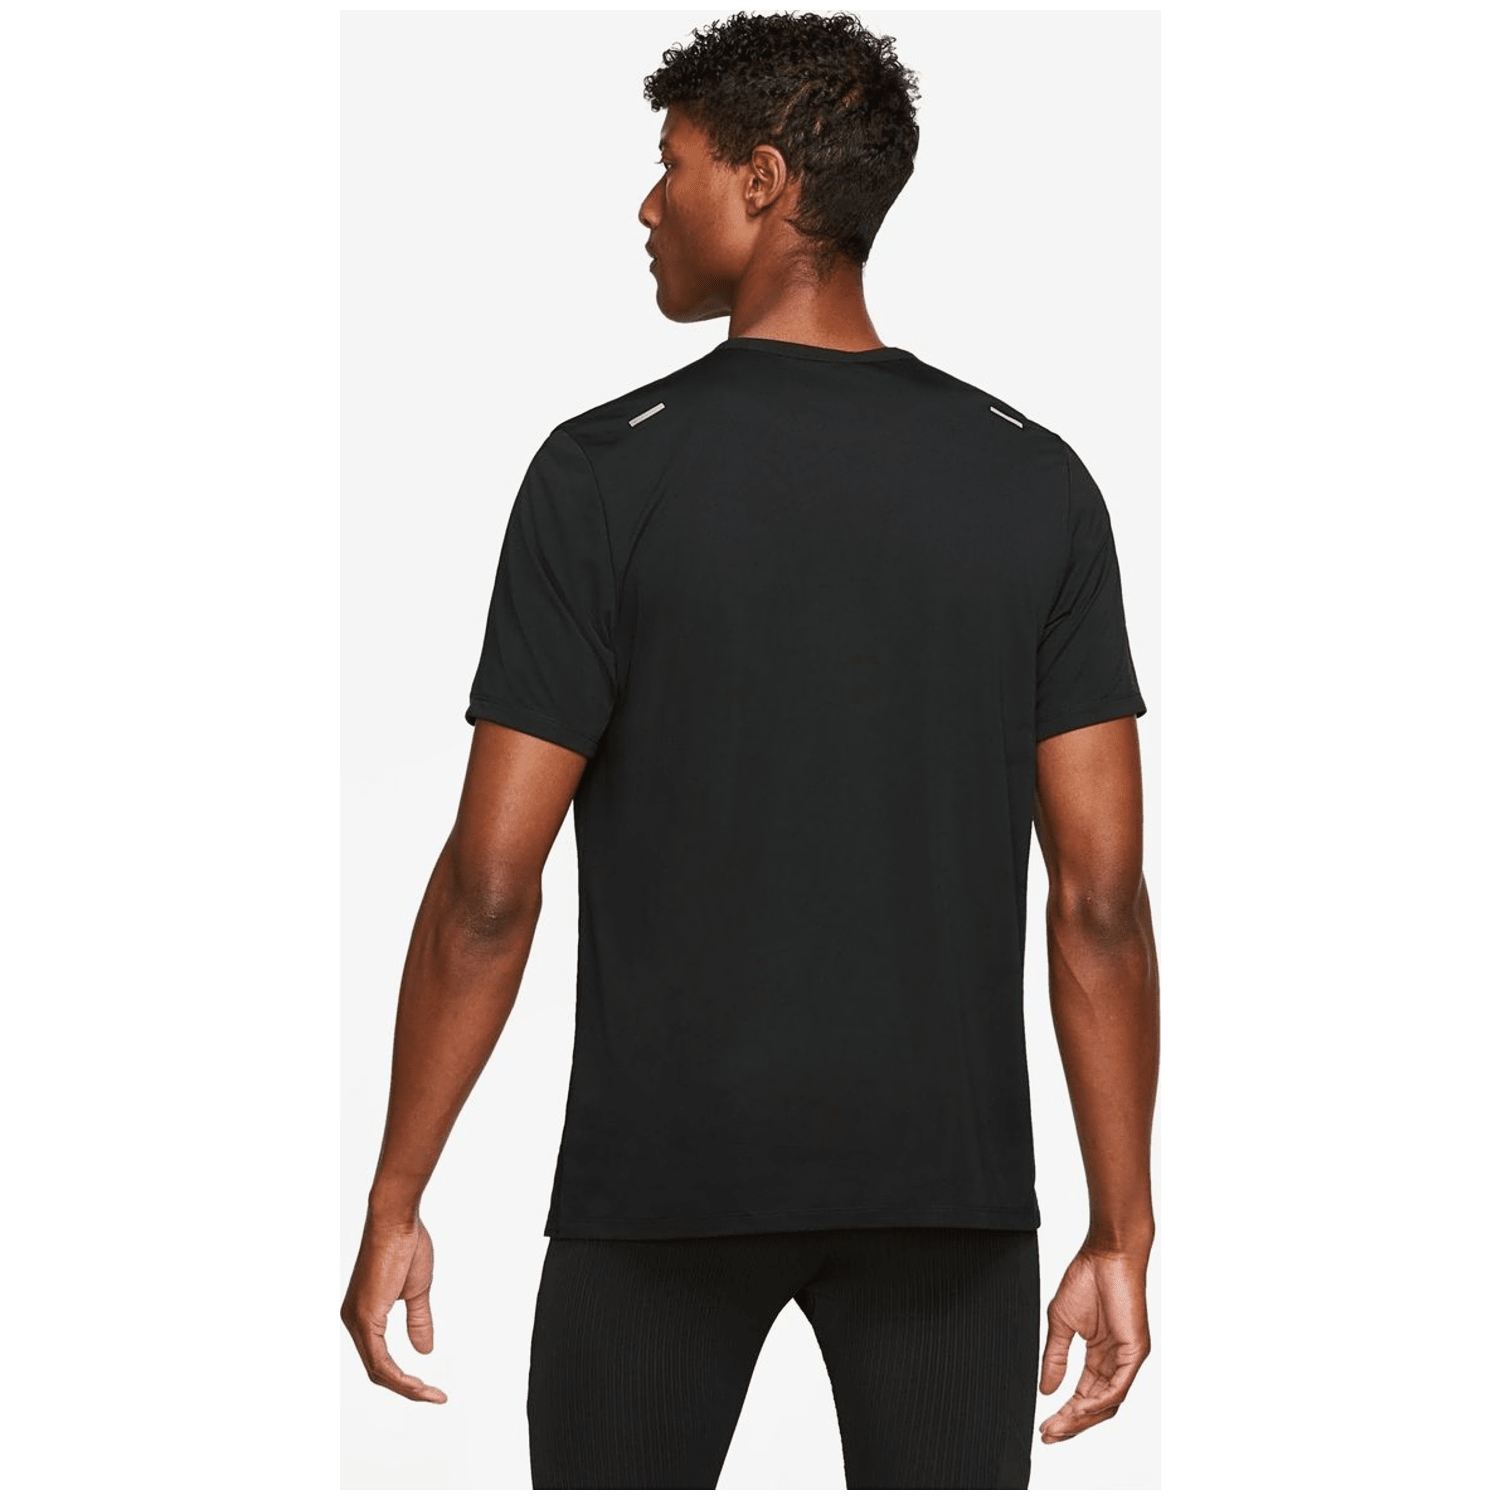 Nike Dri-FIT Rise 365 Top Herren T-Shirt